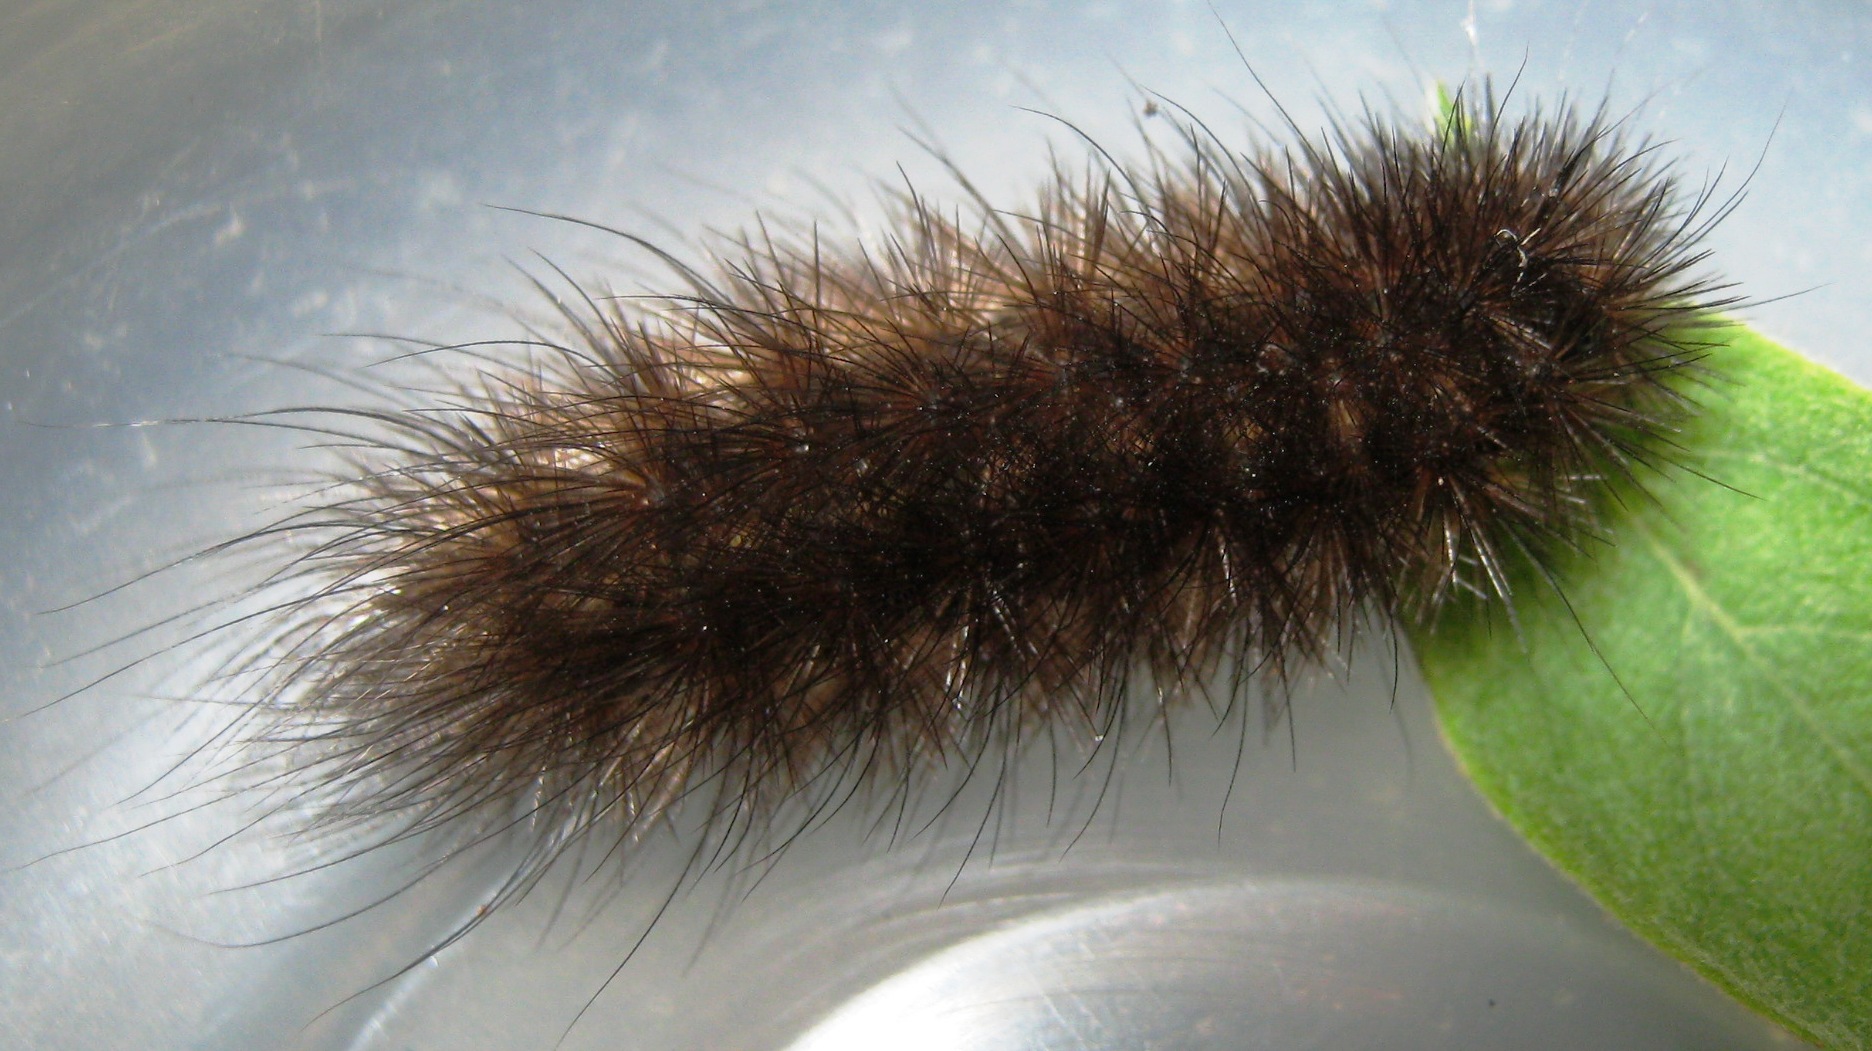 NaturePlus: What is this fluffy caterpillar?